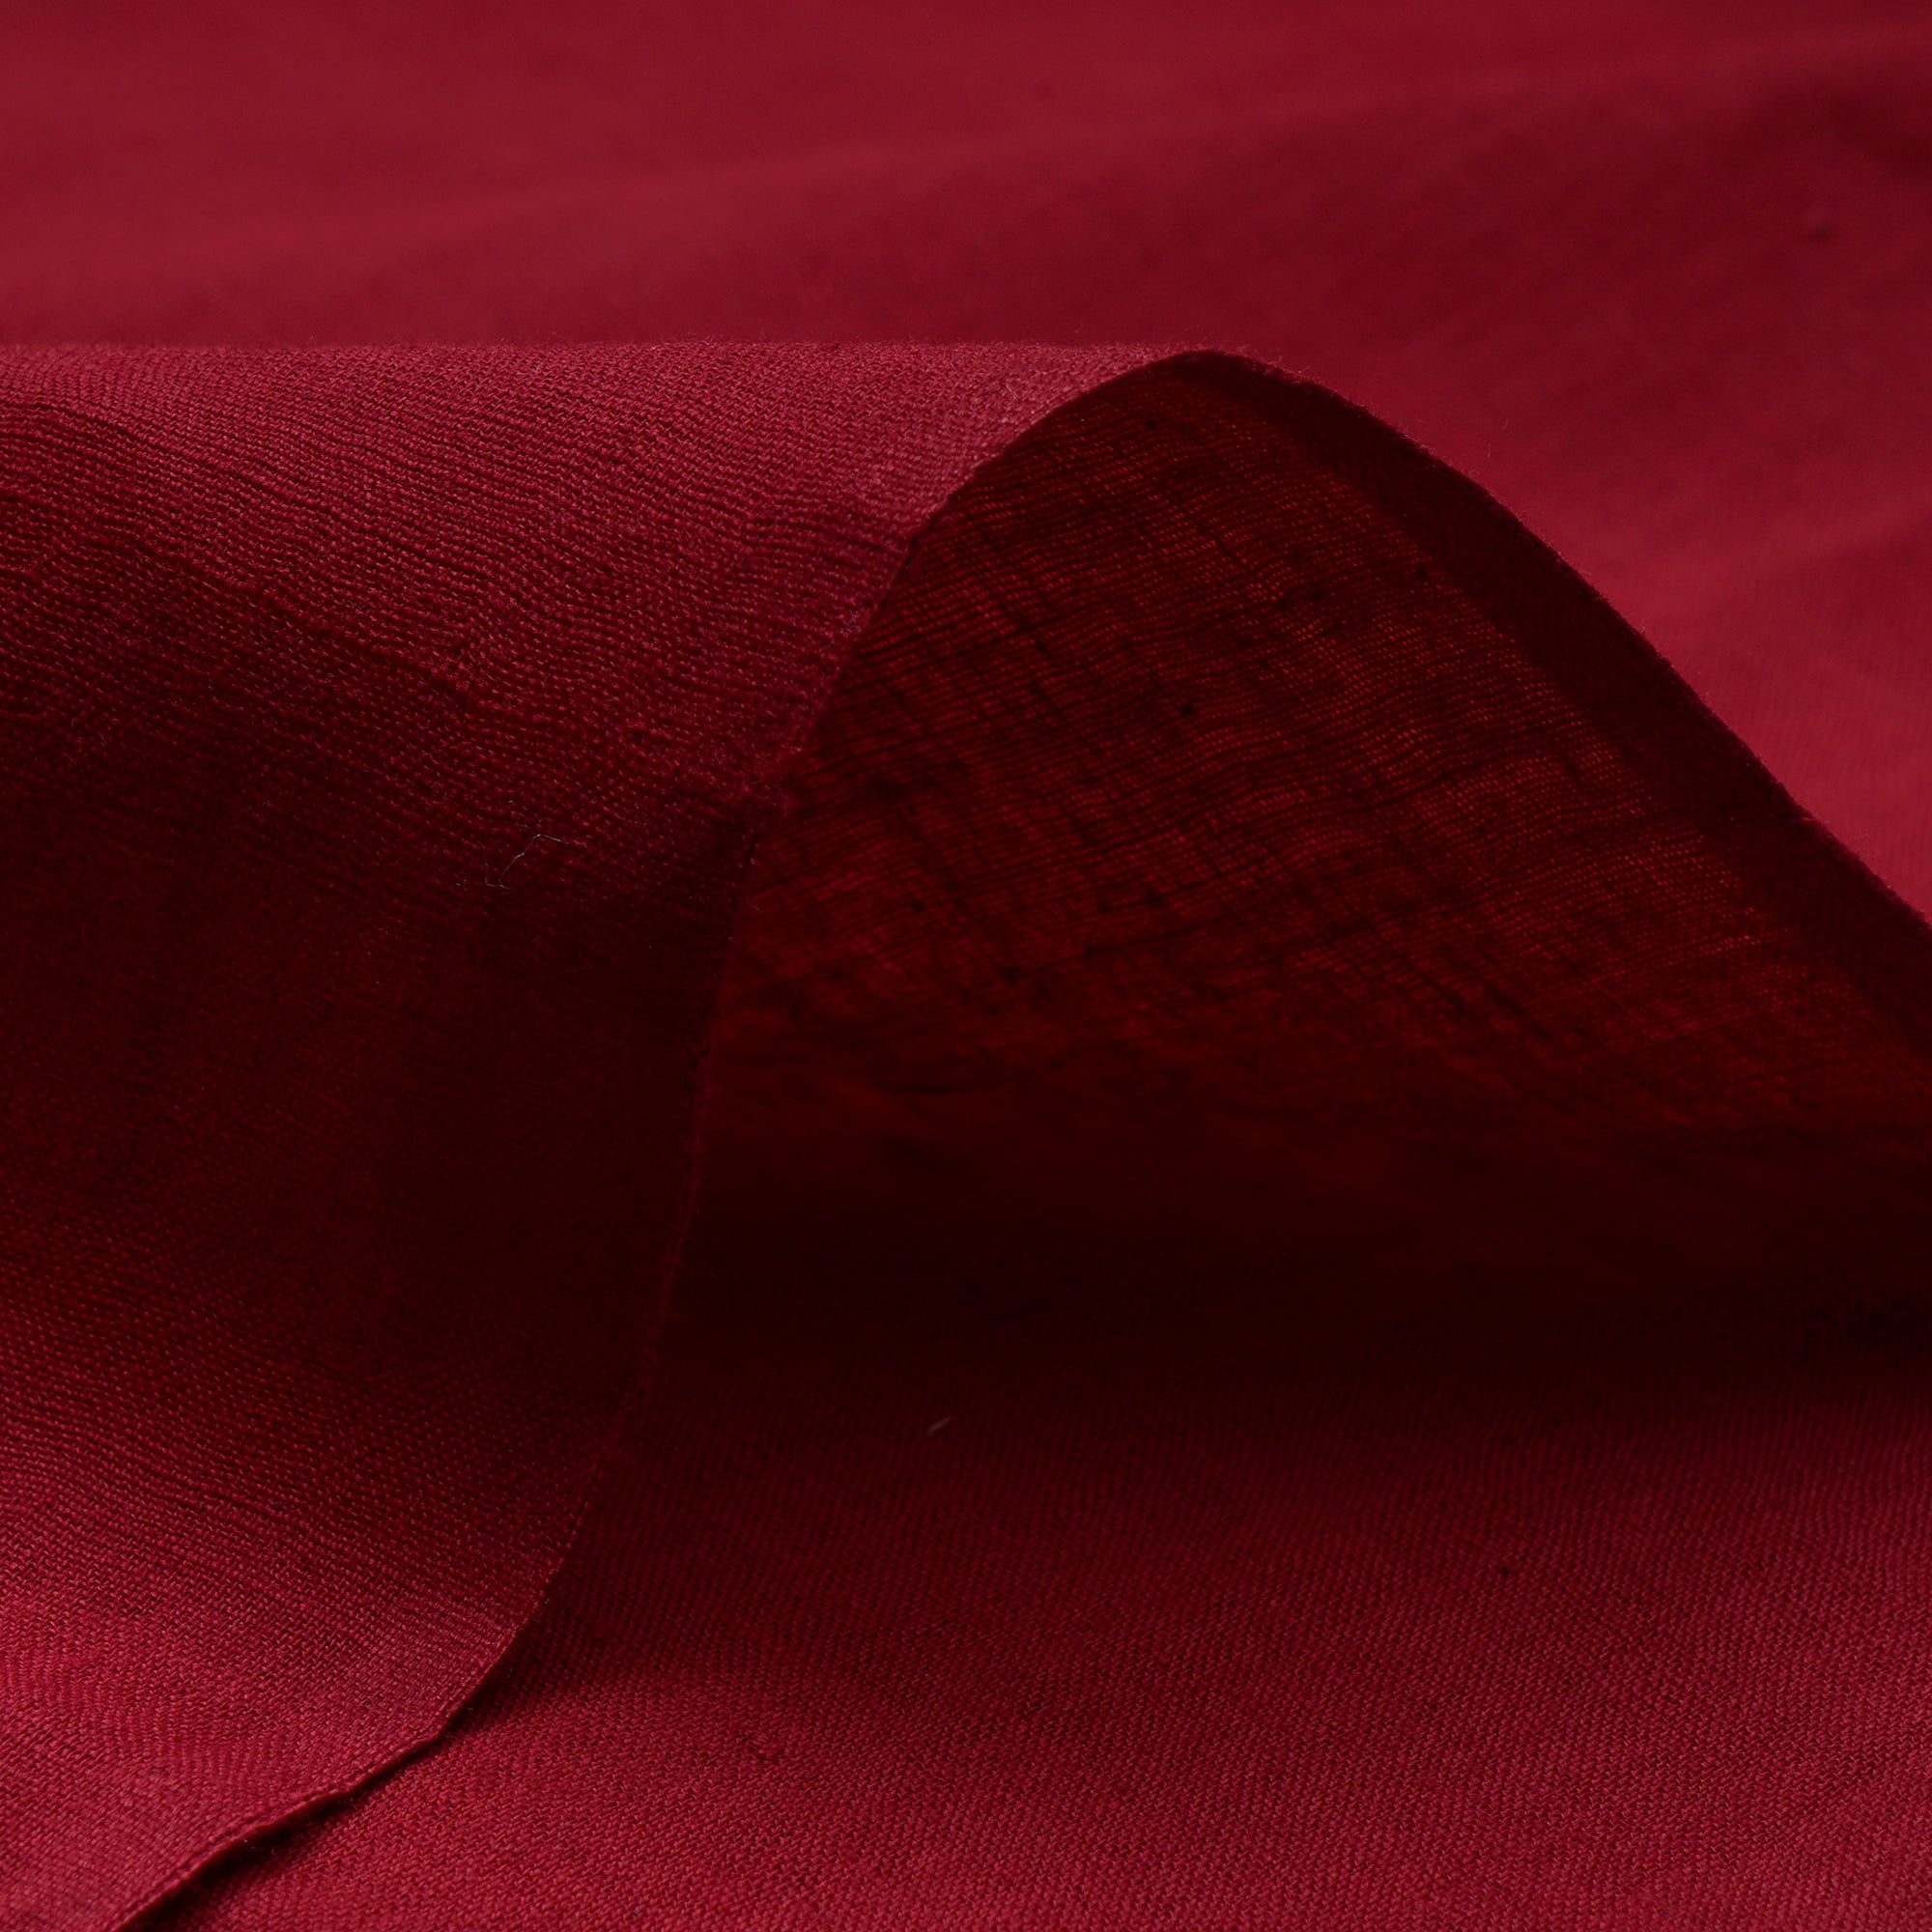 Maroon Handspun Handwoven Muslin Cotton Fabric